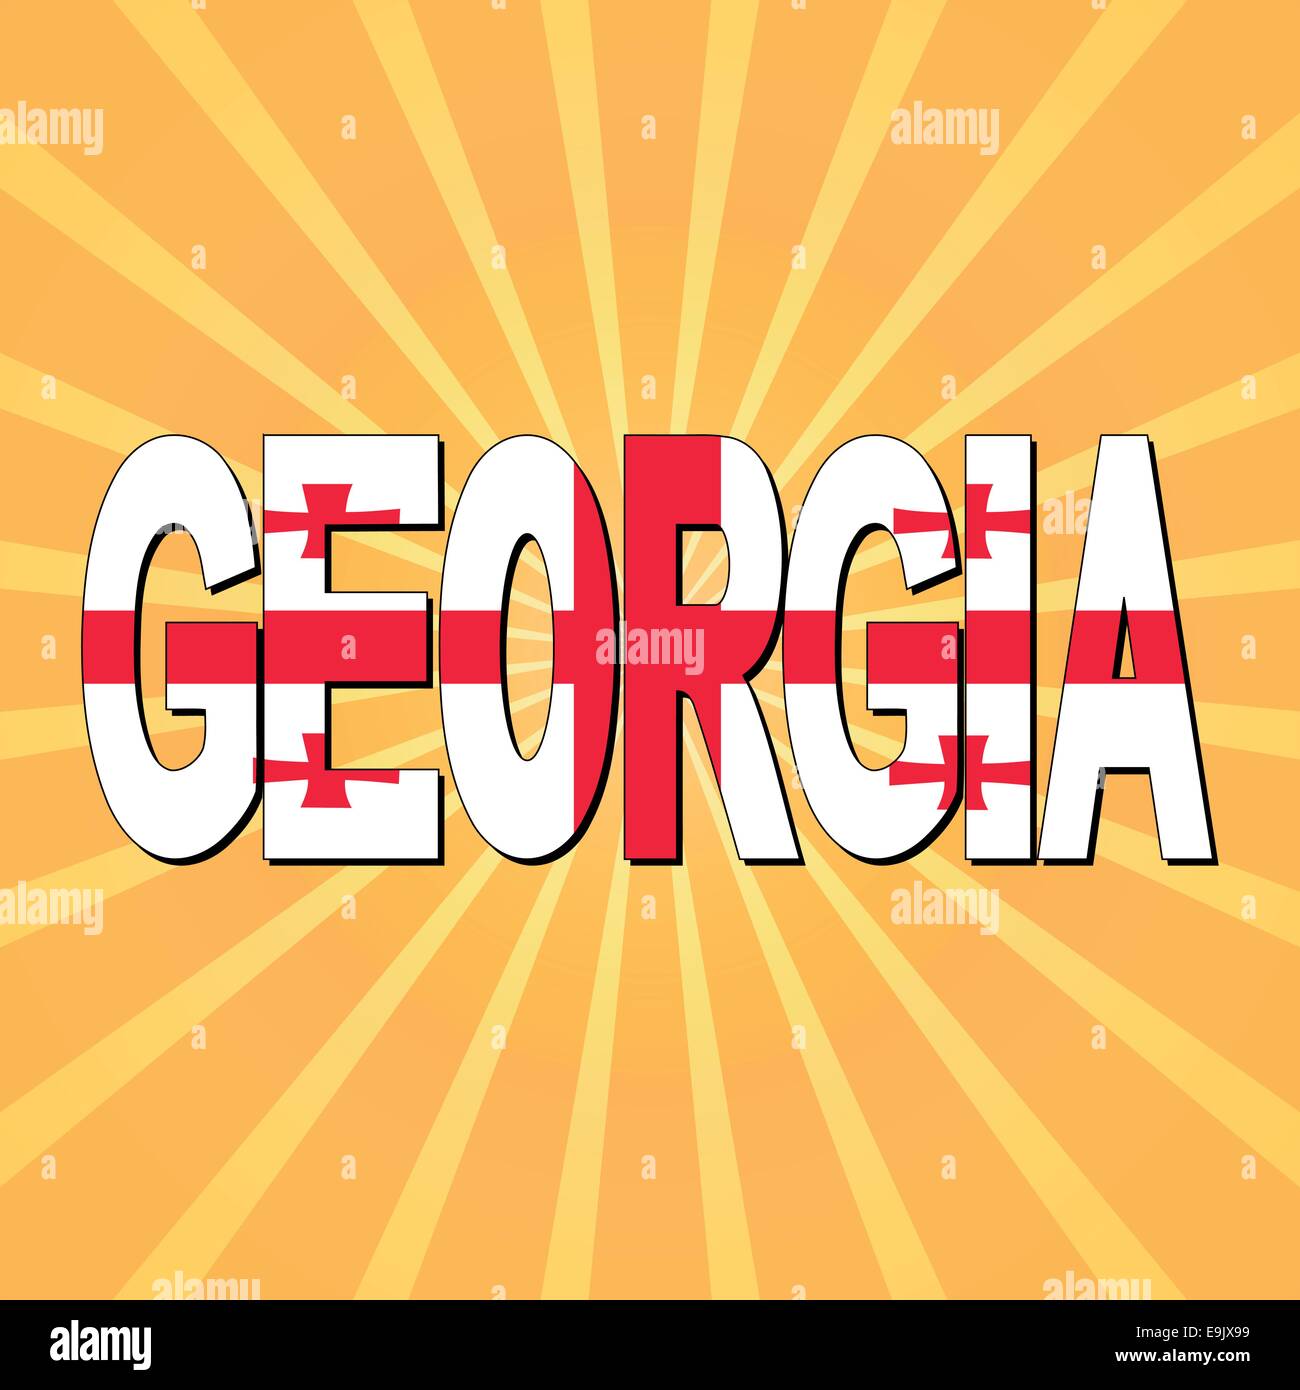 Georgia flag text with sunburst illustration Stock Vector